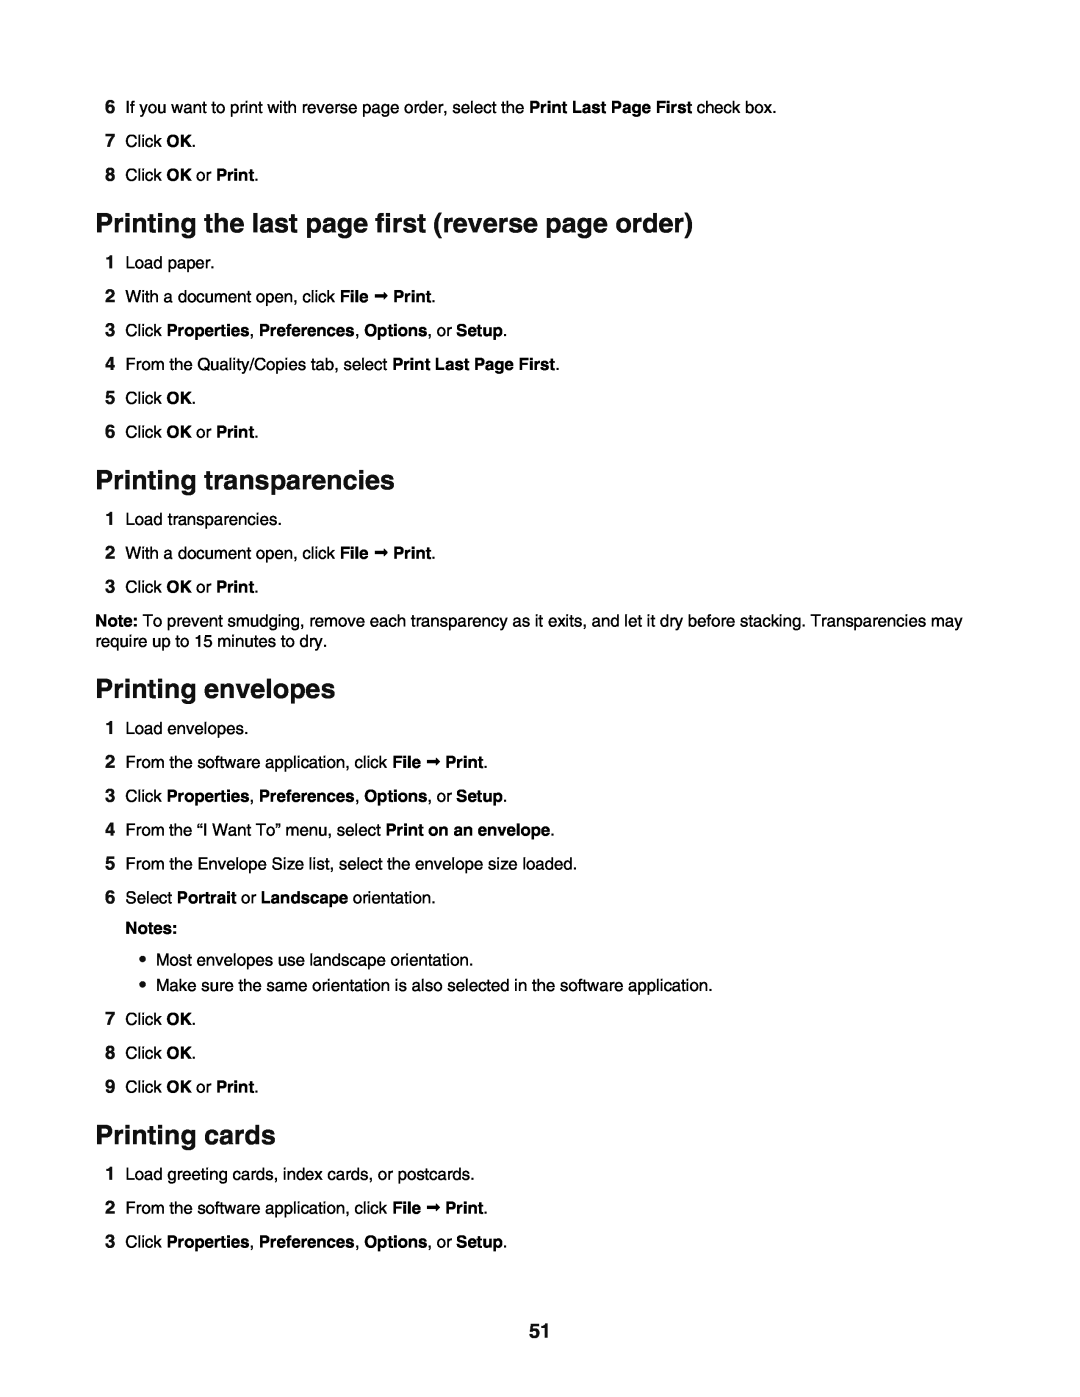 Lexmark 5400 Printing the last page first reverse page order, Printing transparencies, Printing envelopes, Printing cards 